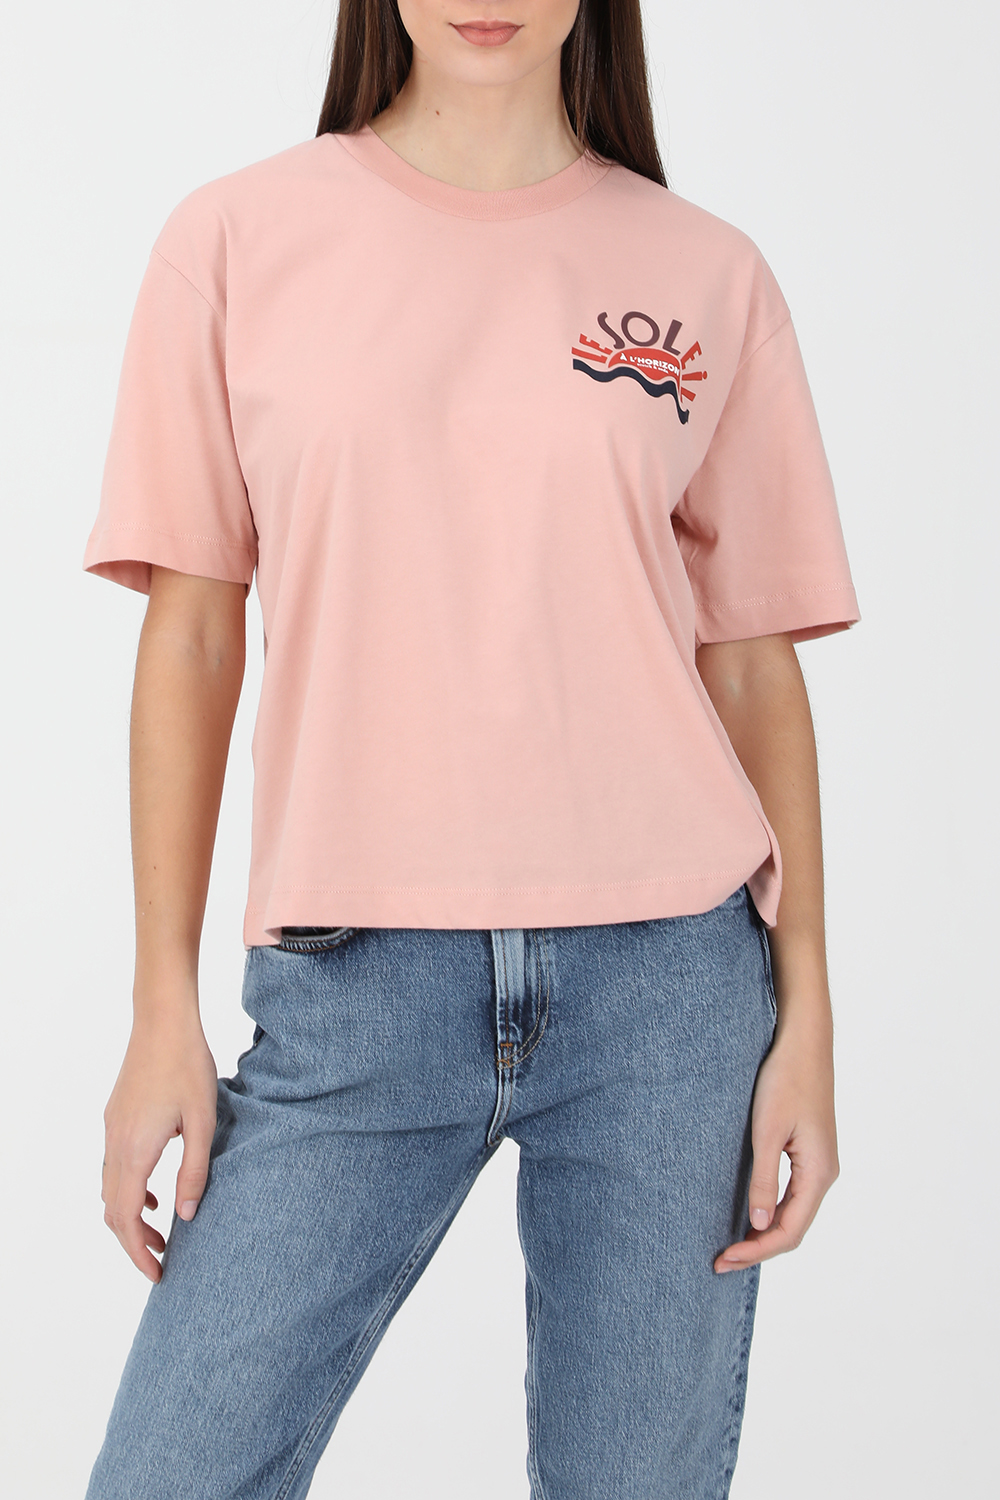 SCOTCH & SODA – Γυναικεία κοντομάνικη μπλούζα SCOTCH & SODA ροζ 1821064.0-00P3